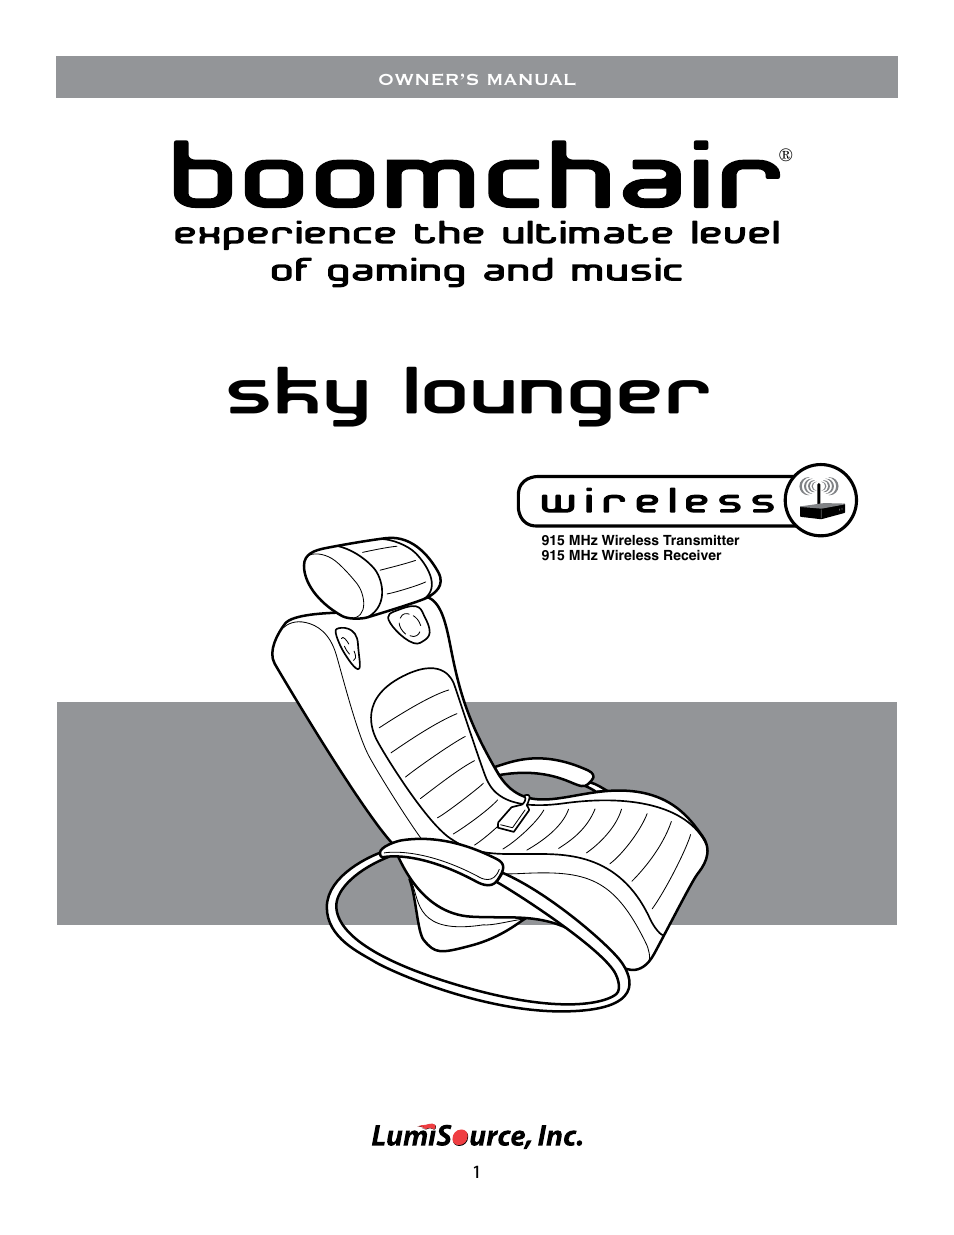 Sky Lounger - Wireless